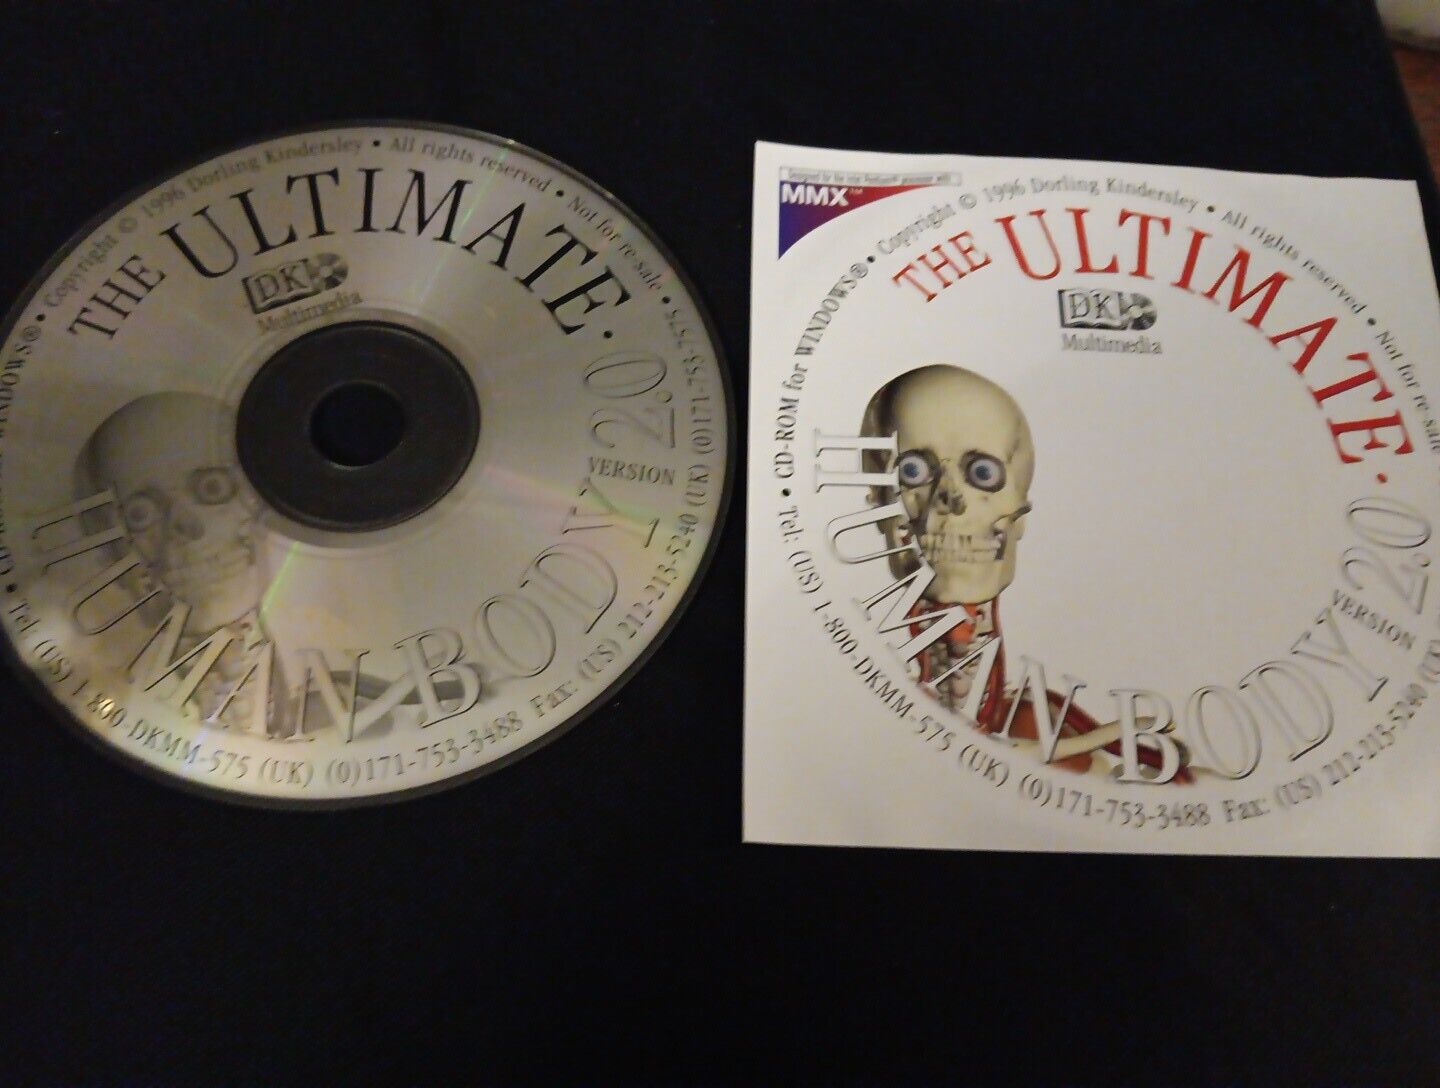 DK Multimedia The Ultimate Human Body 2.0 CD-ROM for Windows 1996 